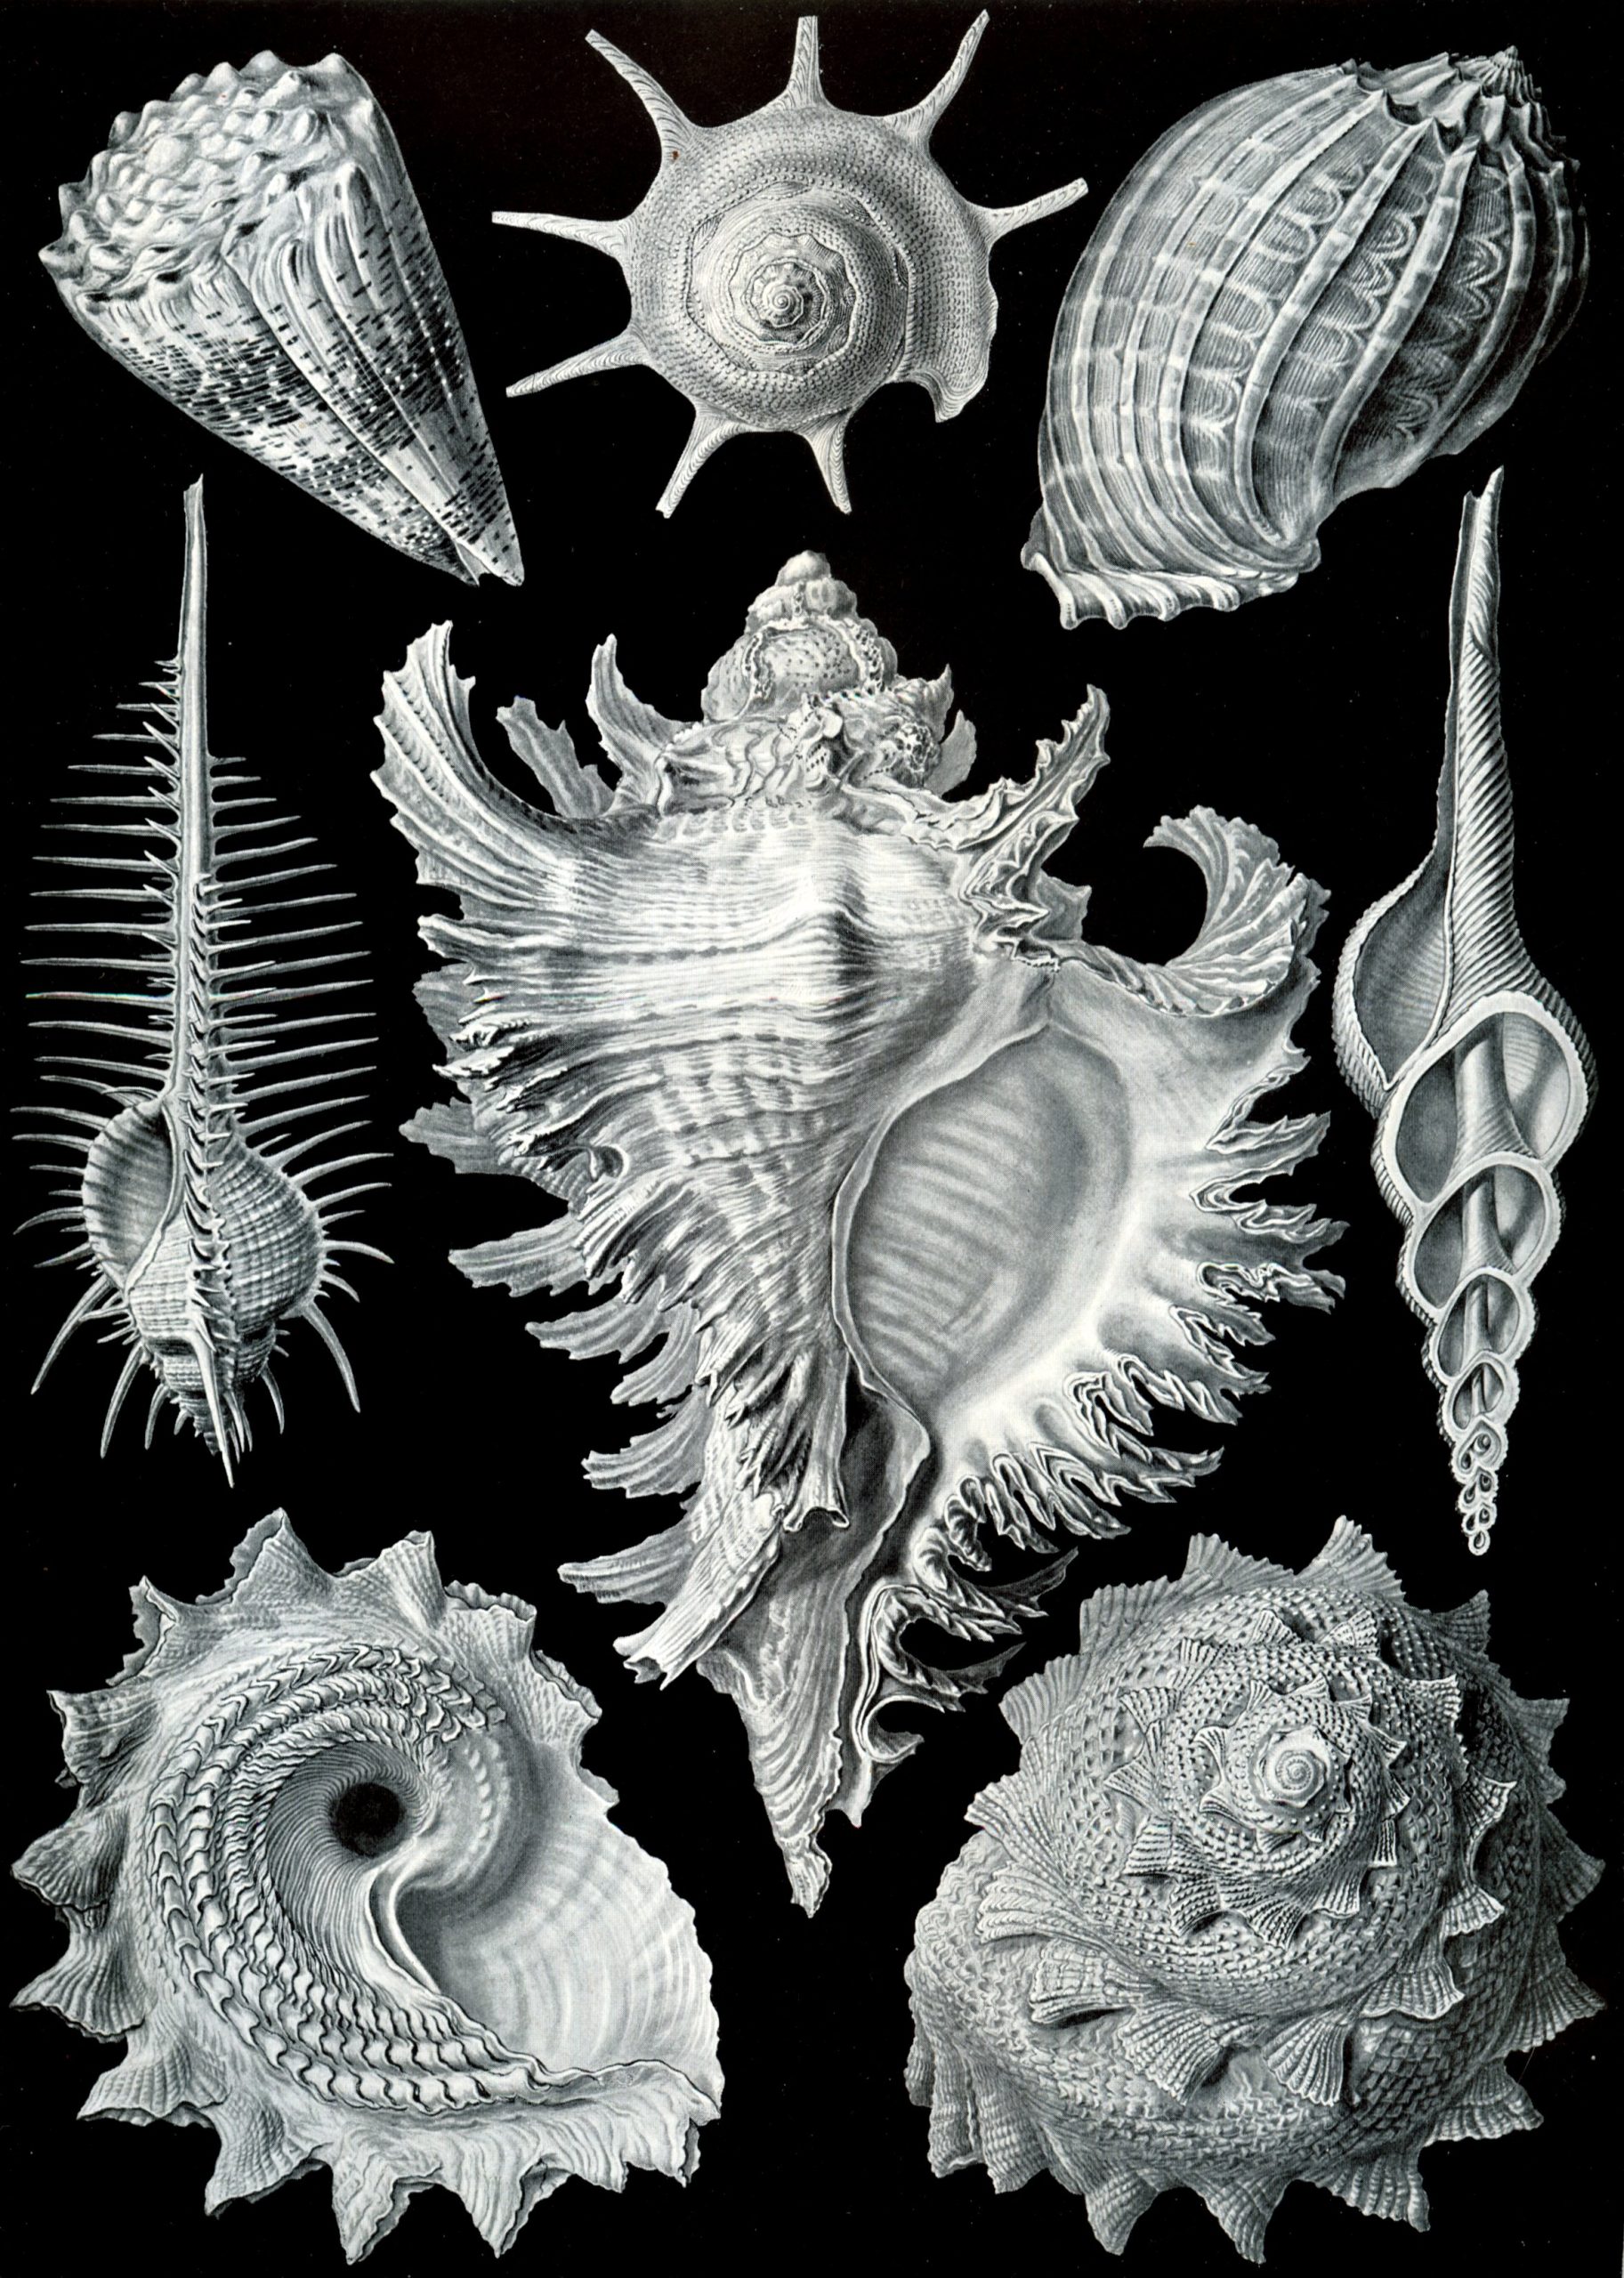 A scientific illustration of various seashells